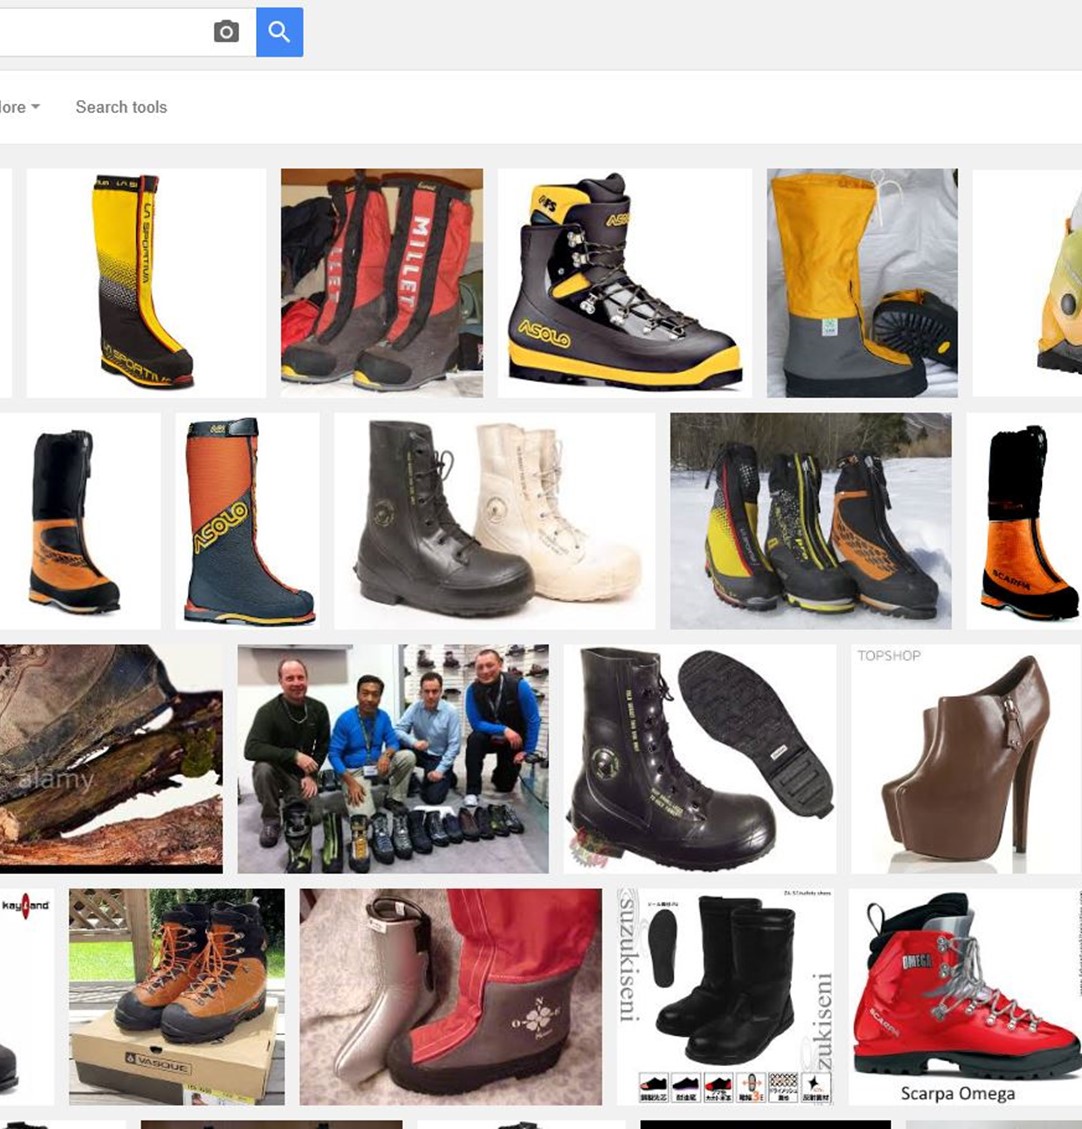 Choosing high altitude boots